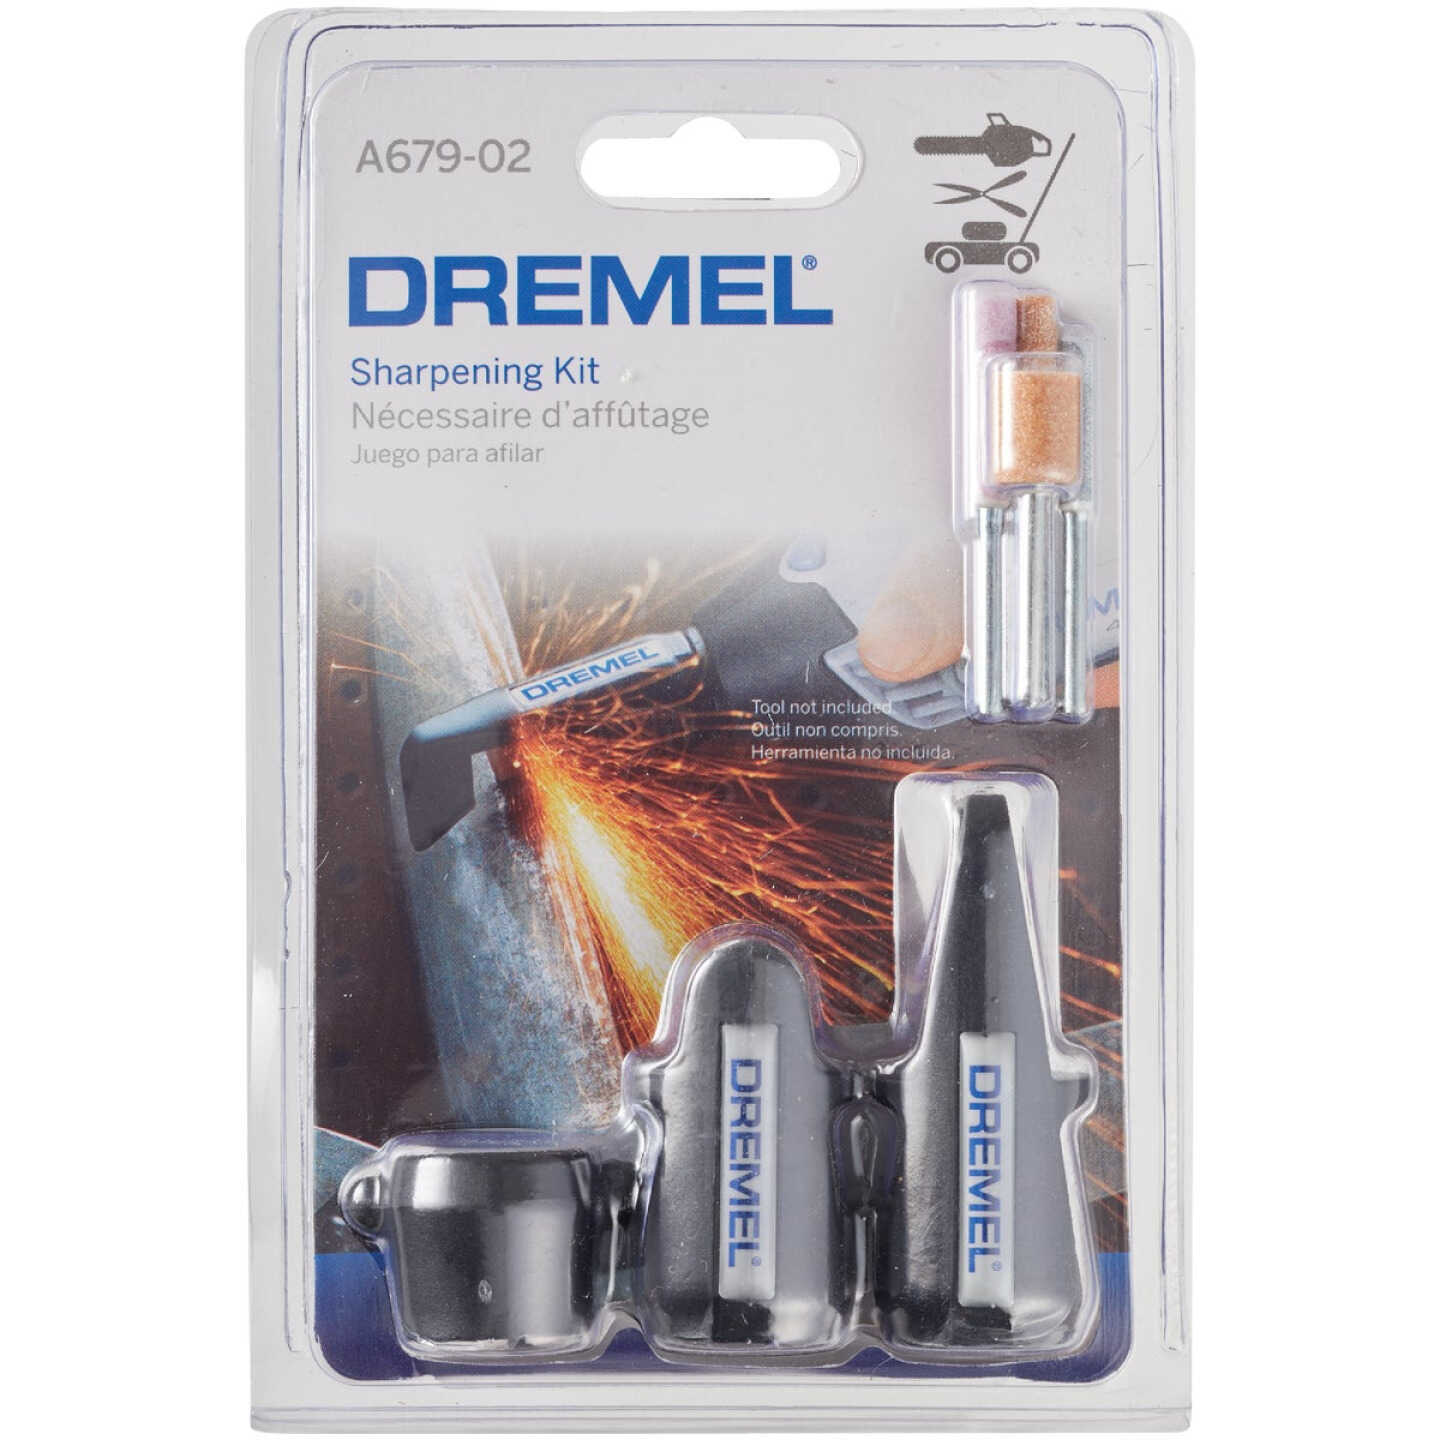 DREMEL® Sharpening Kit Attachments to Sharpen